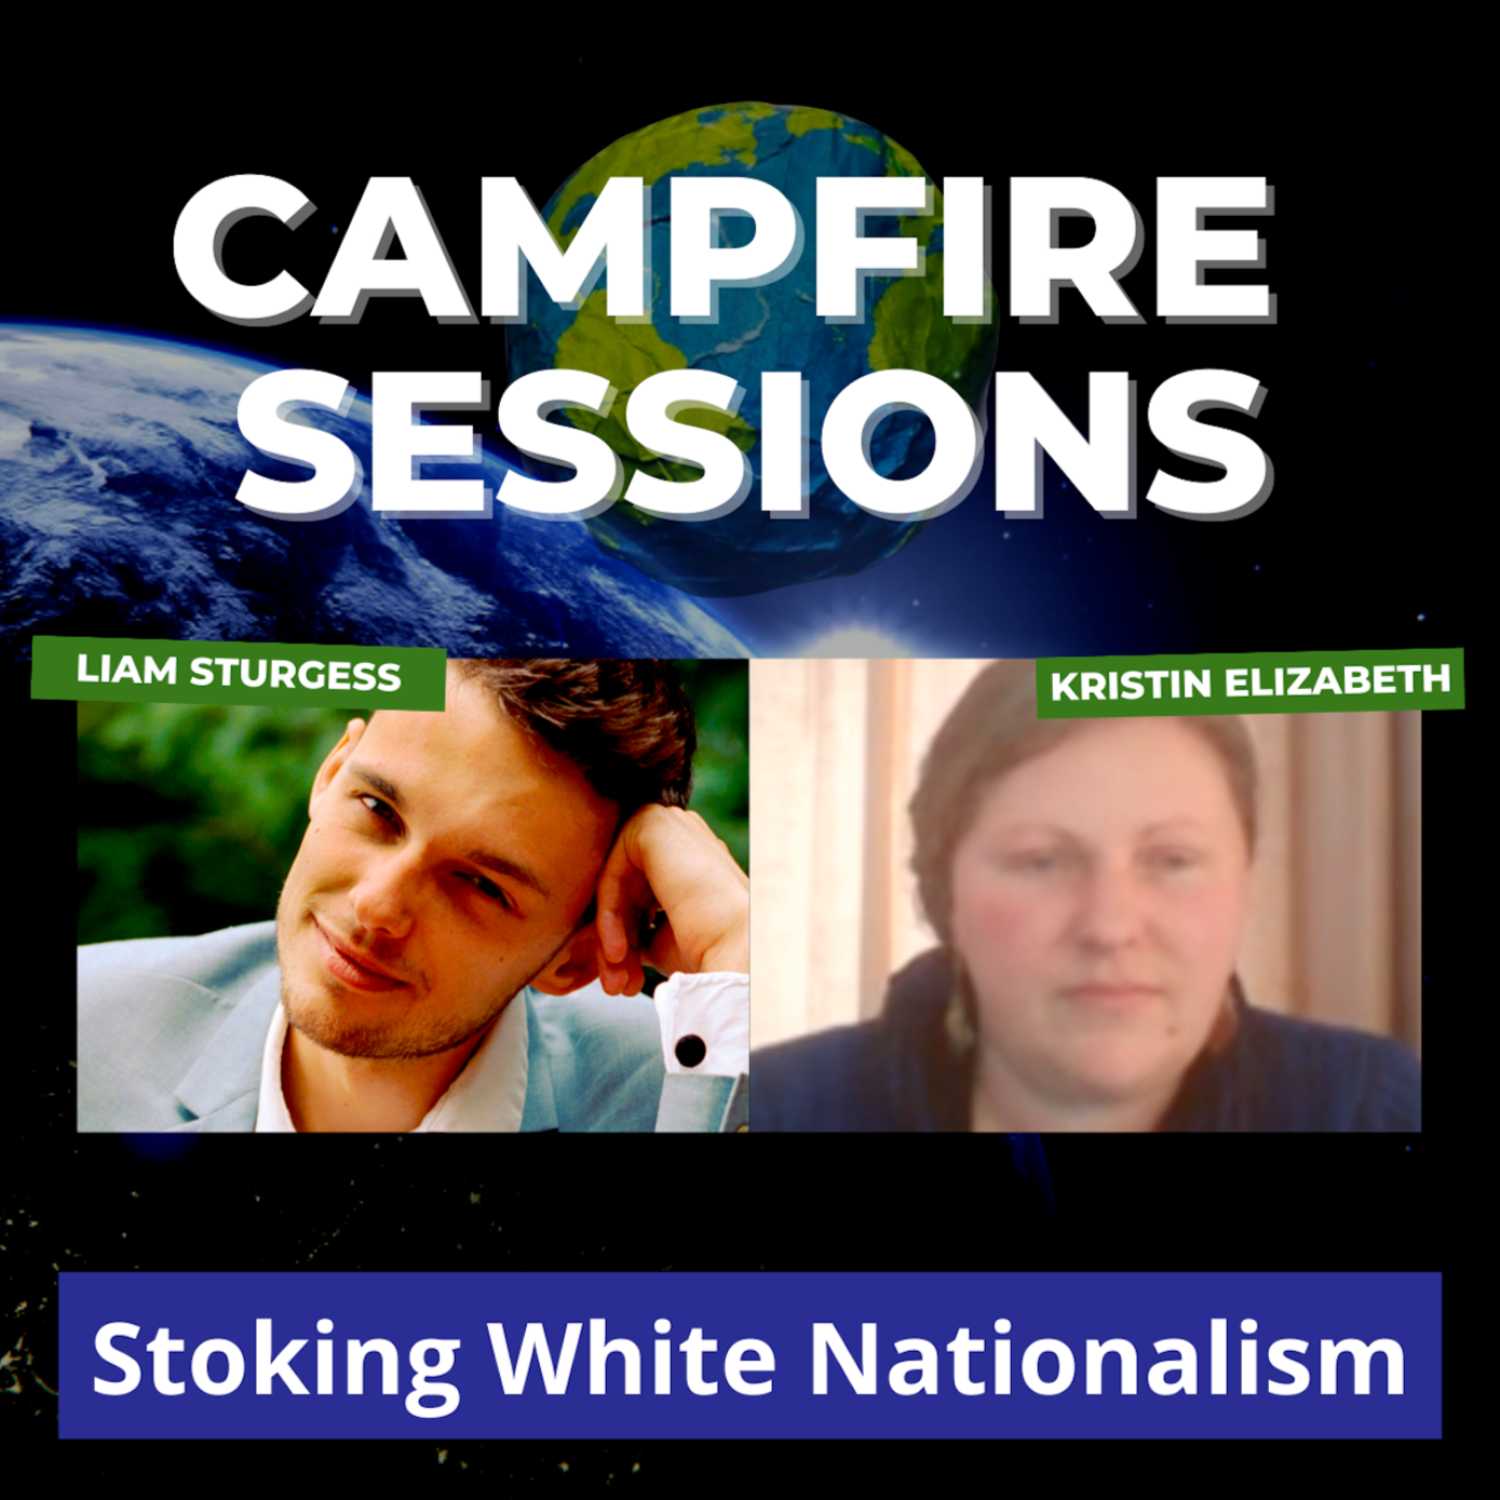 Campfire Session #1: Stoking White Nationalism (w/ Kristin Elizabeth)